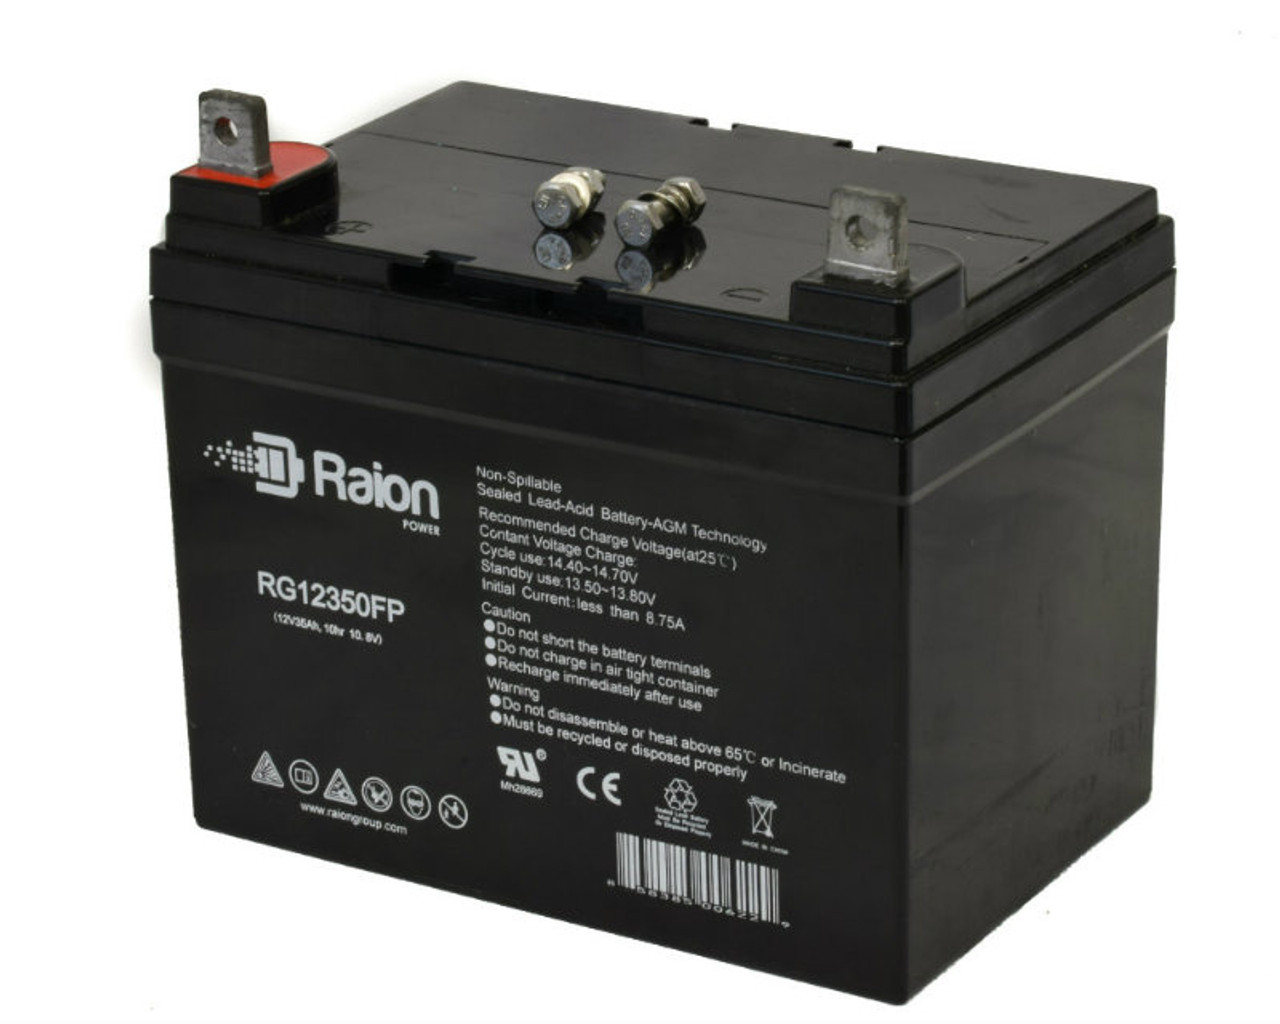 Raion Power Replacement 12V 35Ah Battery for NPower 24928 Flex Powerpack XL 800A - 1 Pack